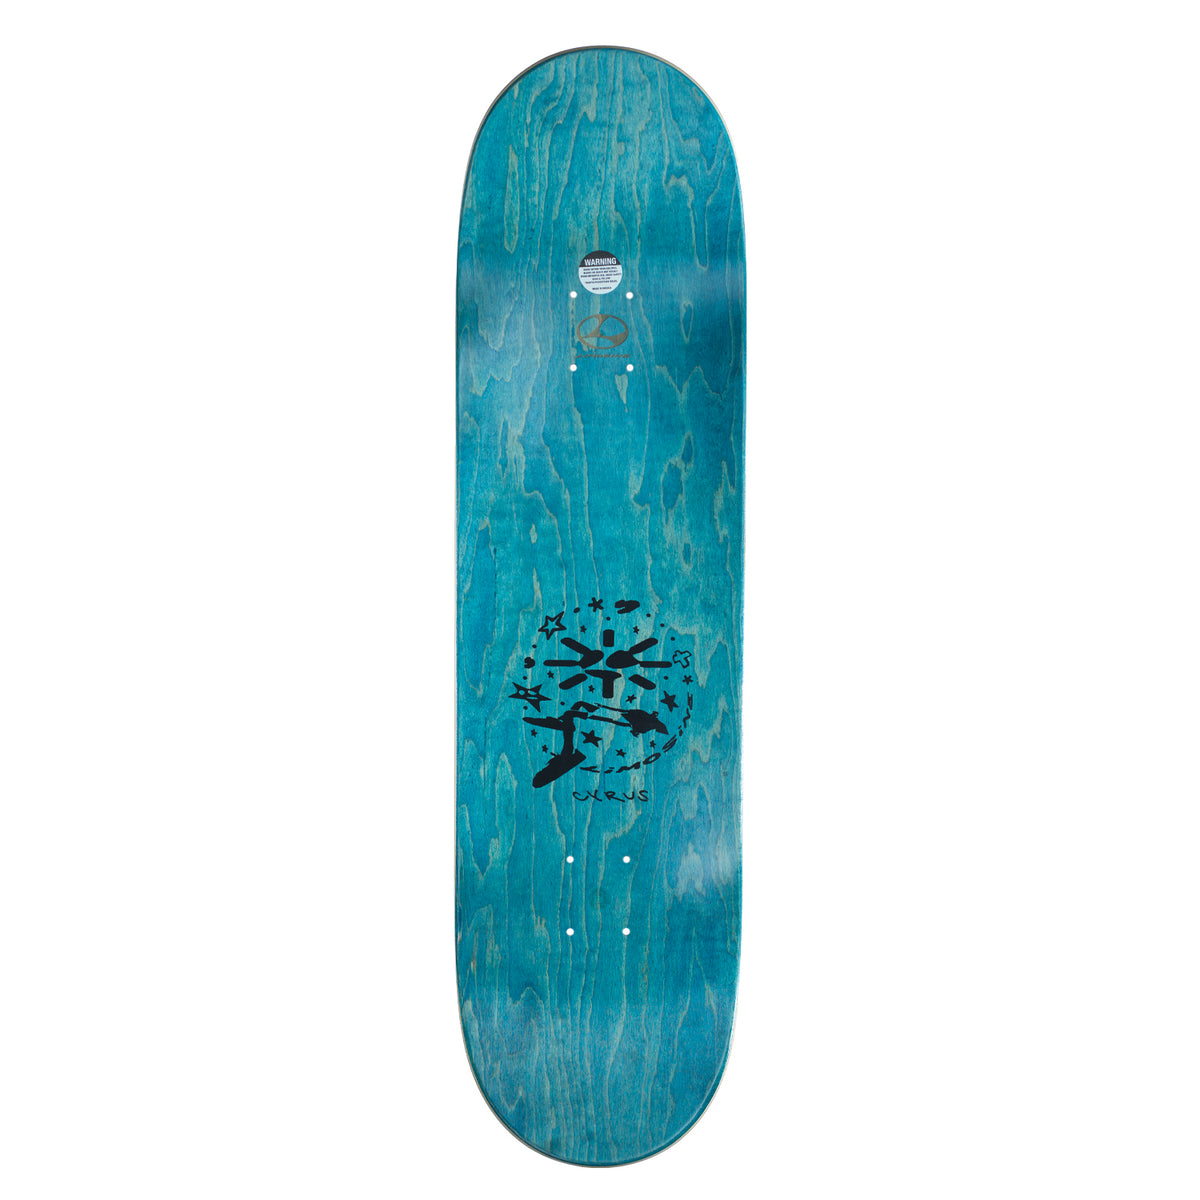 Limosine Cyrus Bennett 'Solar Sucker' Skateboard Deck - 8.38 / 8.5